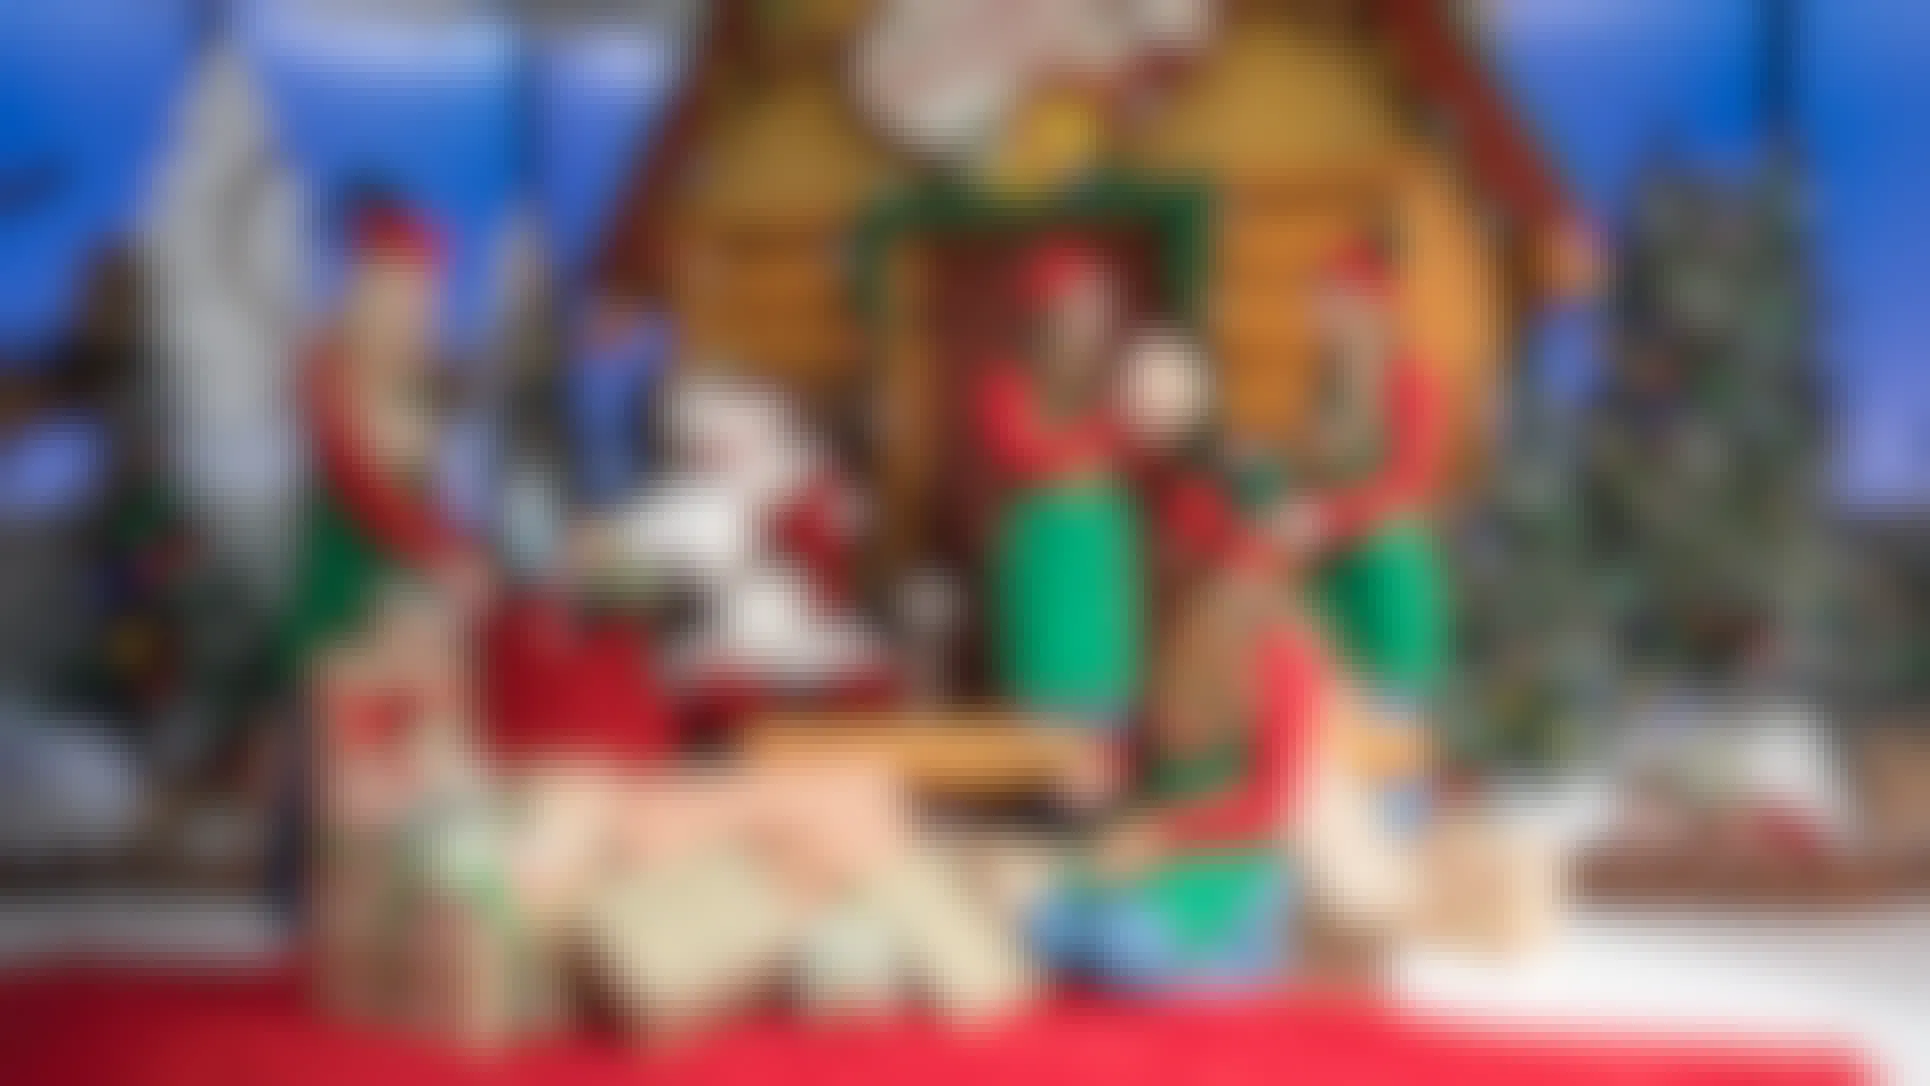 Bass Pro Santa Is Gifting You a Free Holiday Photo This Year